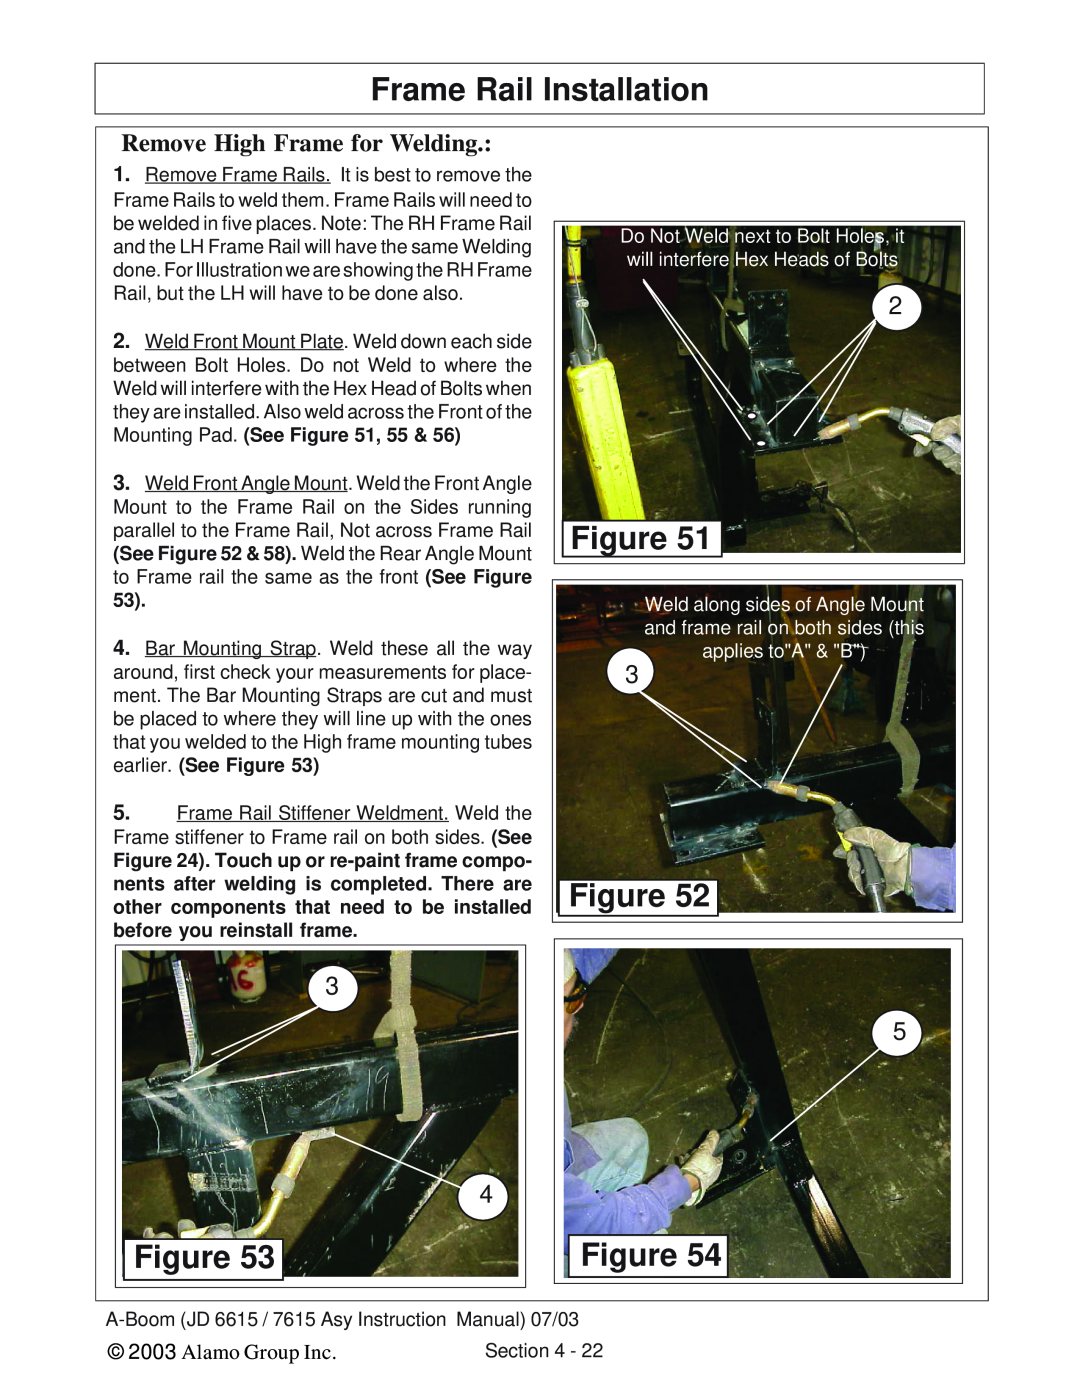 Alamo DSEB-D16/SAS instruction manual Remove High Frame for Welding, Frame Rail Installation, Alamo Group Inc 